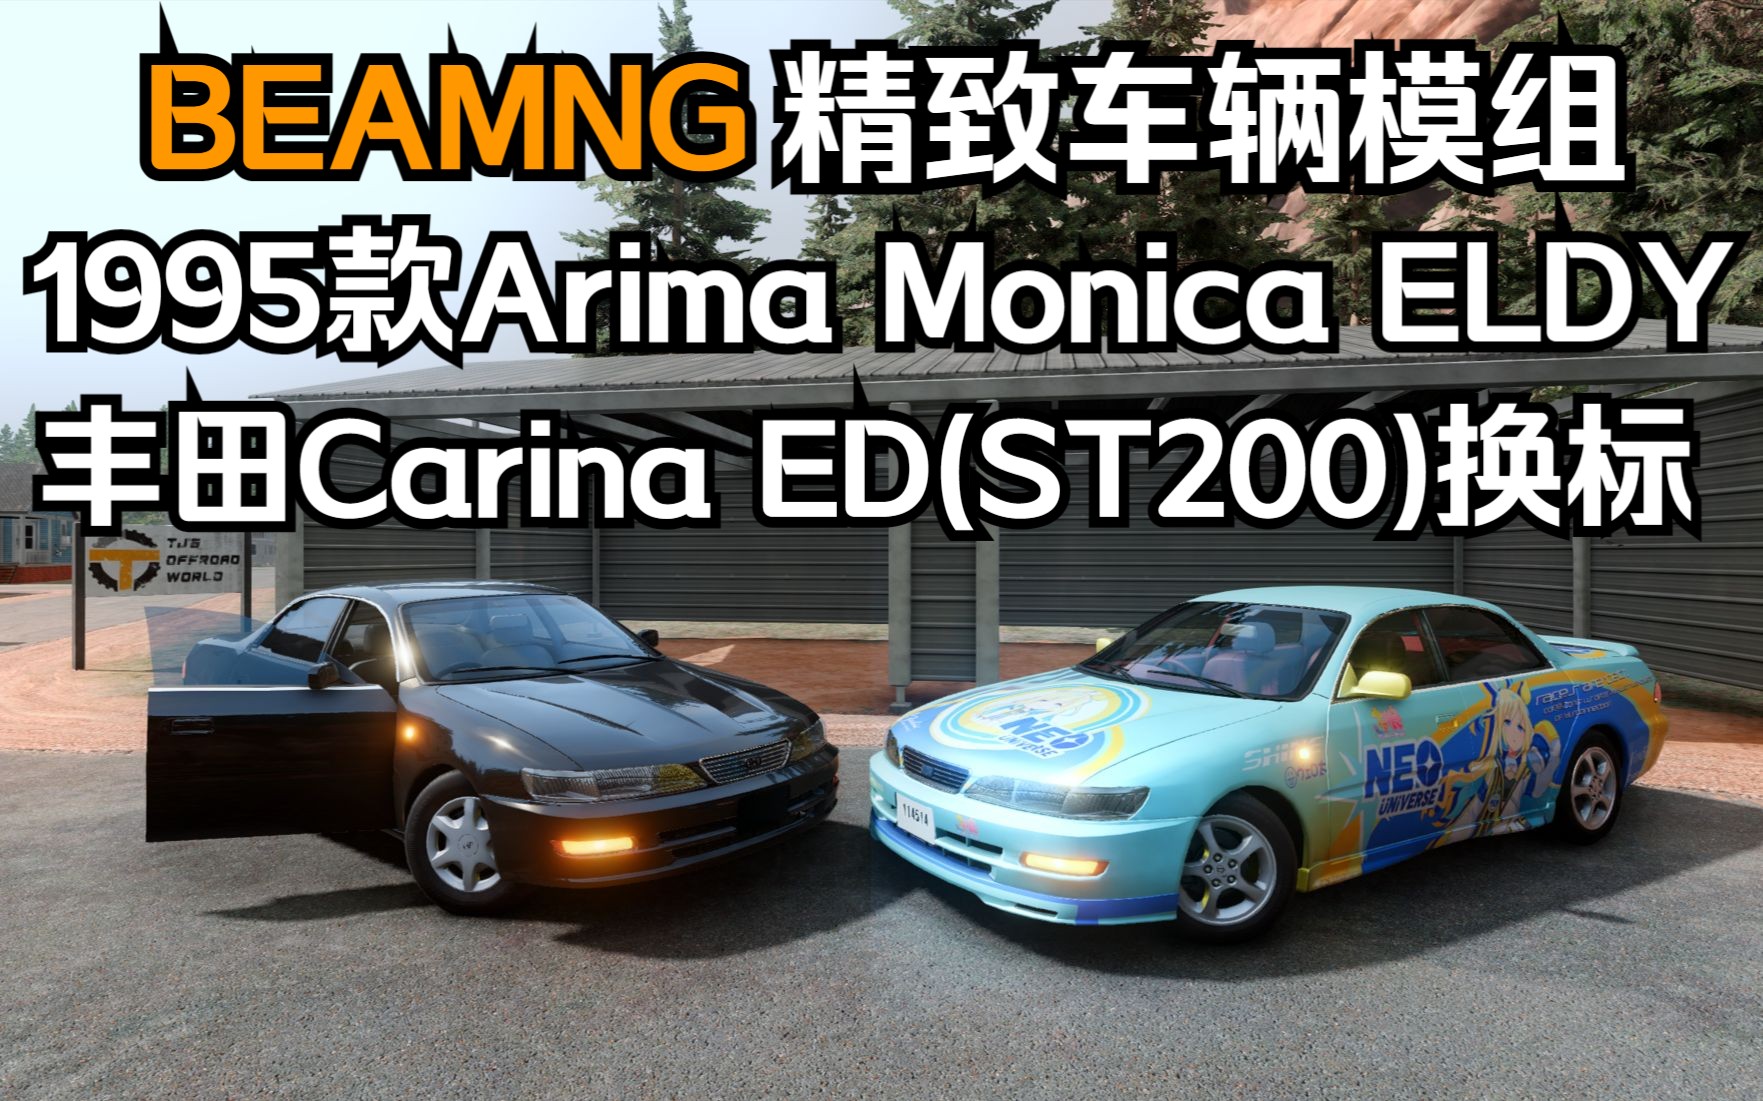 BEAMNG精致车辆模组-1995款Arima Monica ELDY(丰田Carina ED) CanCan_0103制作